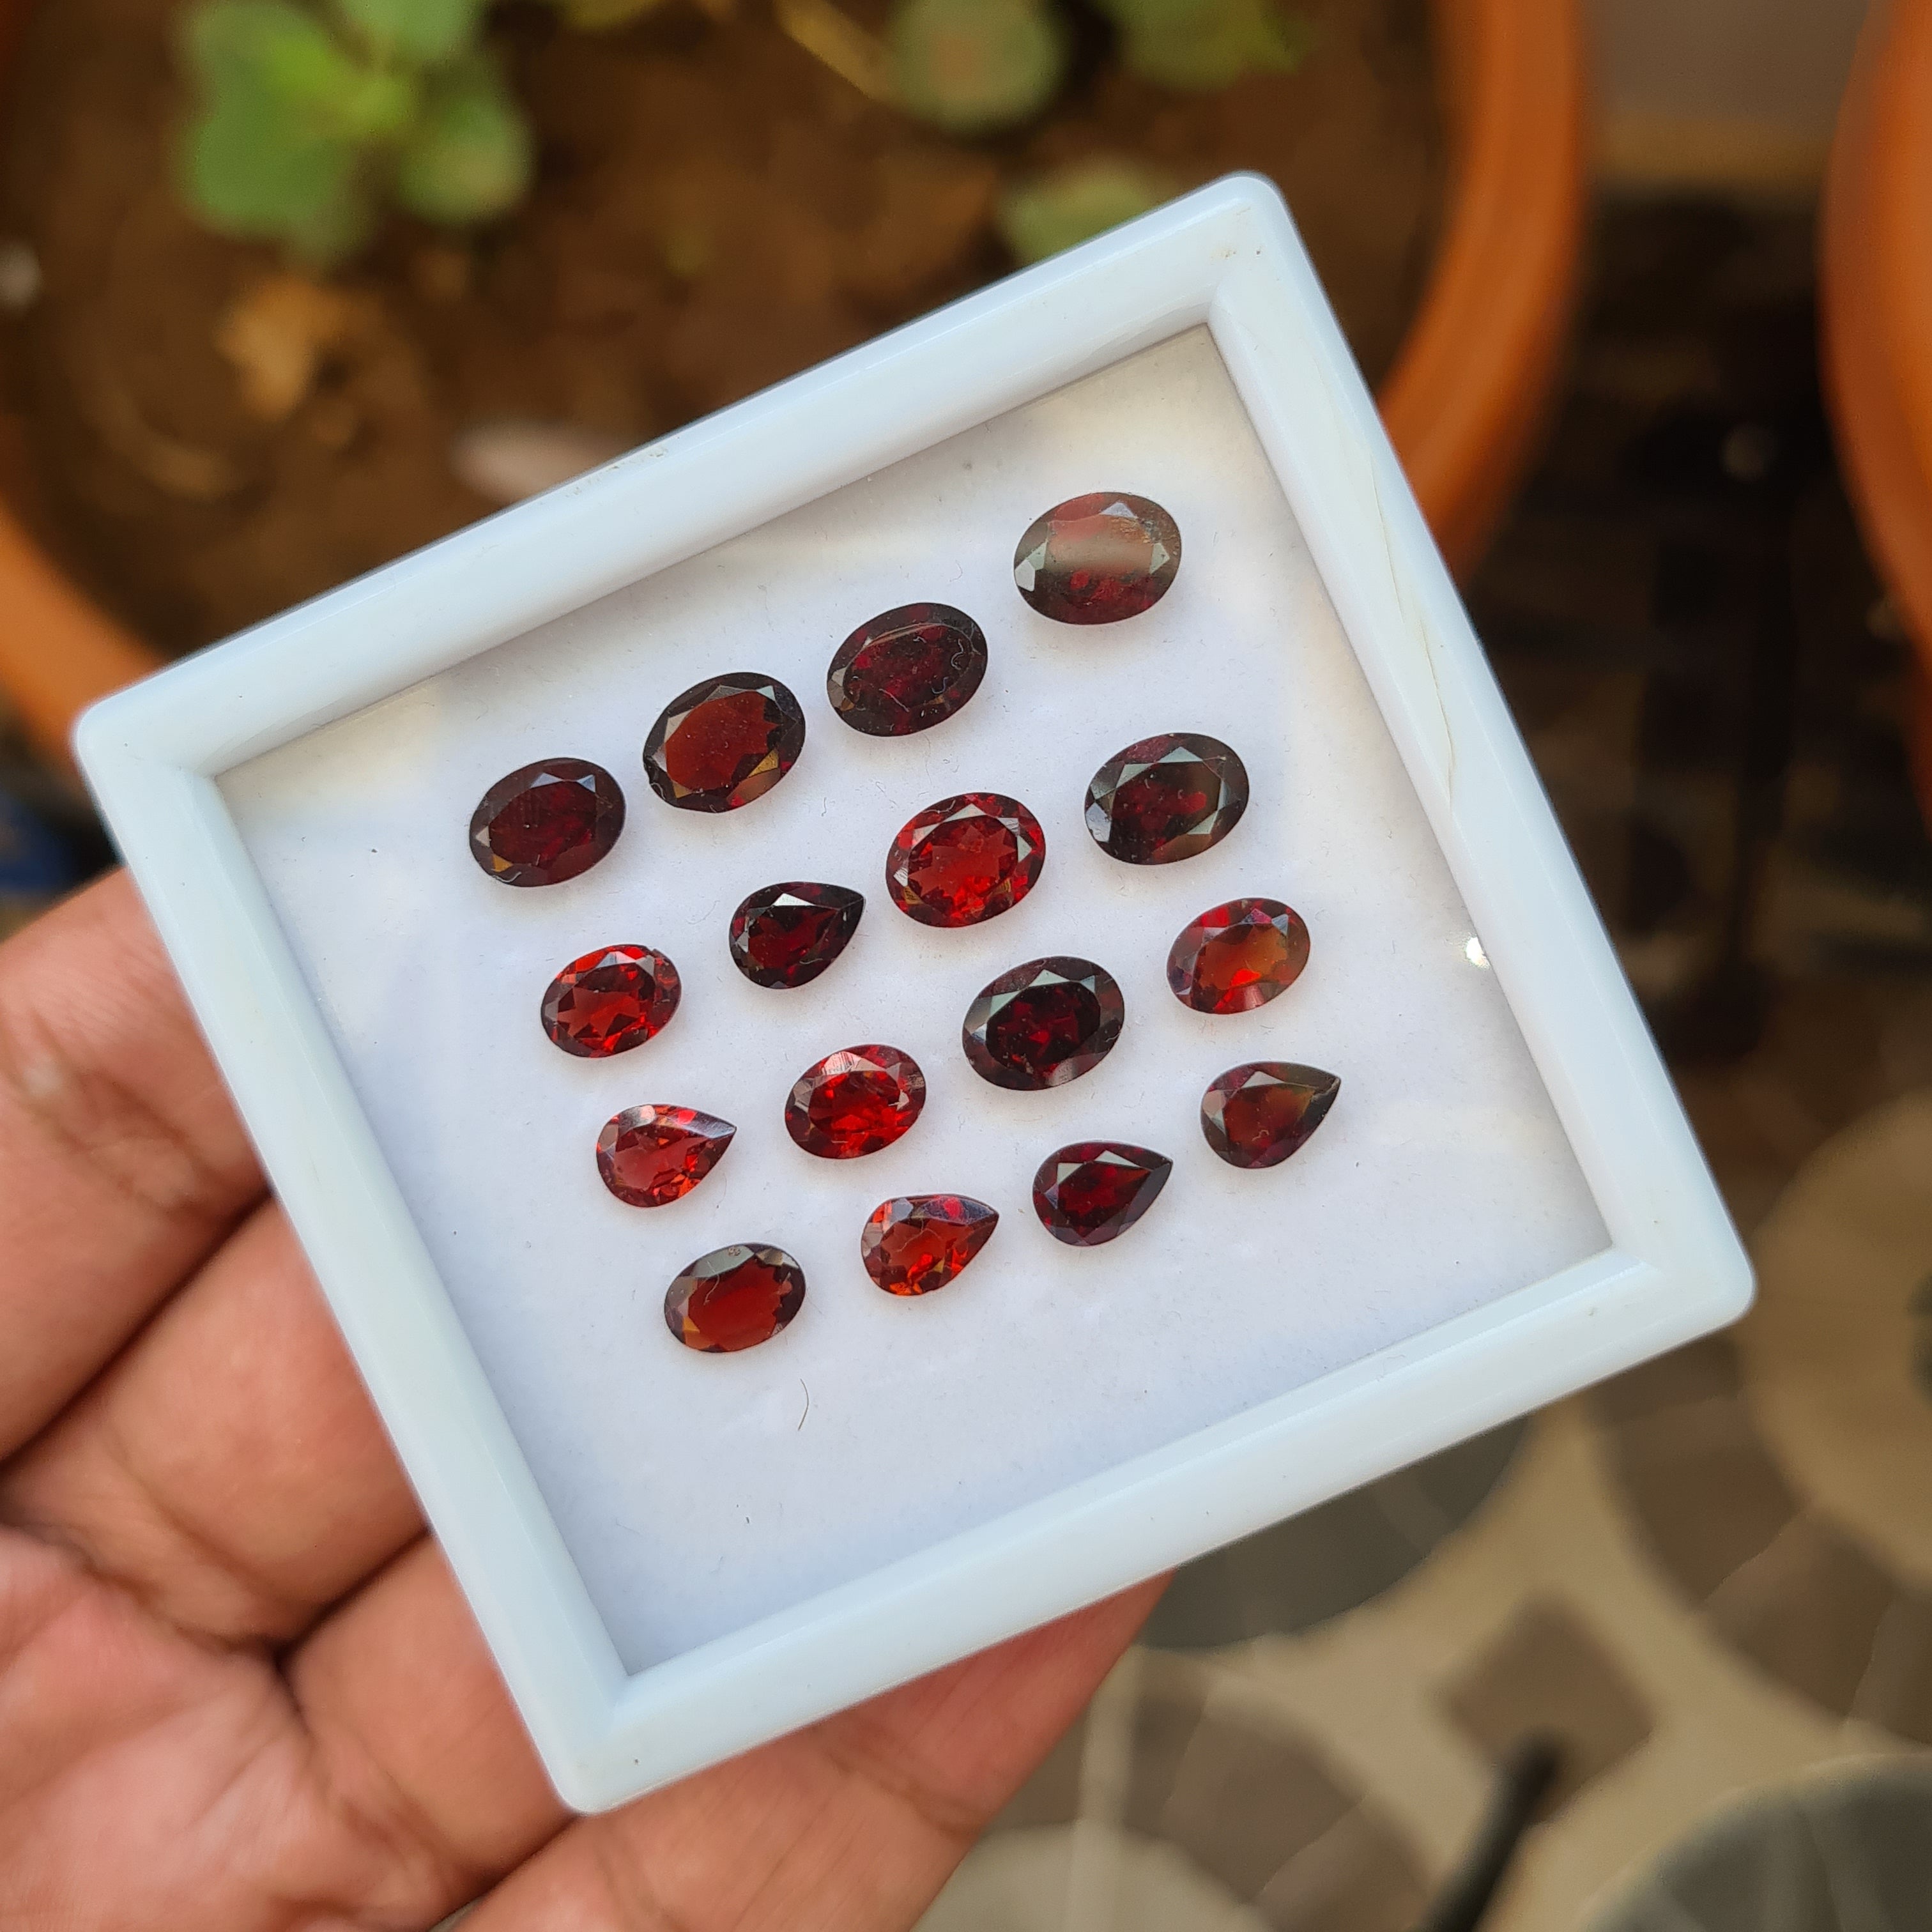 16 Pcs Natural Garnet Faceted Gemstones Mix Shape,7-8mm Gems Lot -Loose Gemstones - The LabradoriteKing